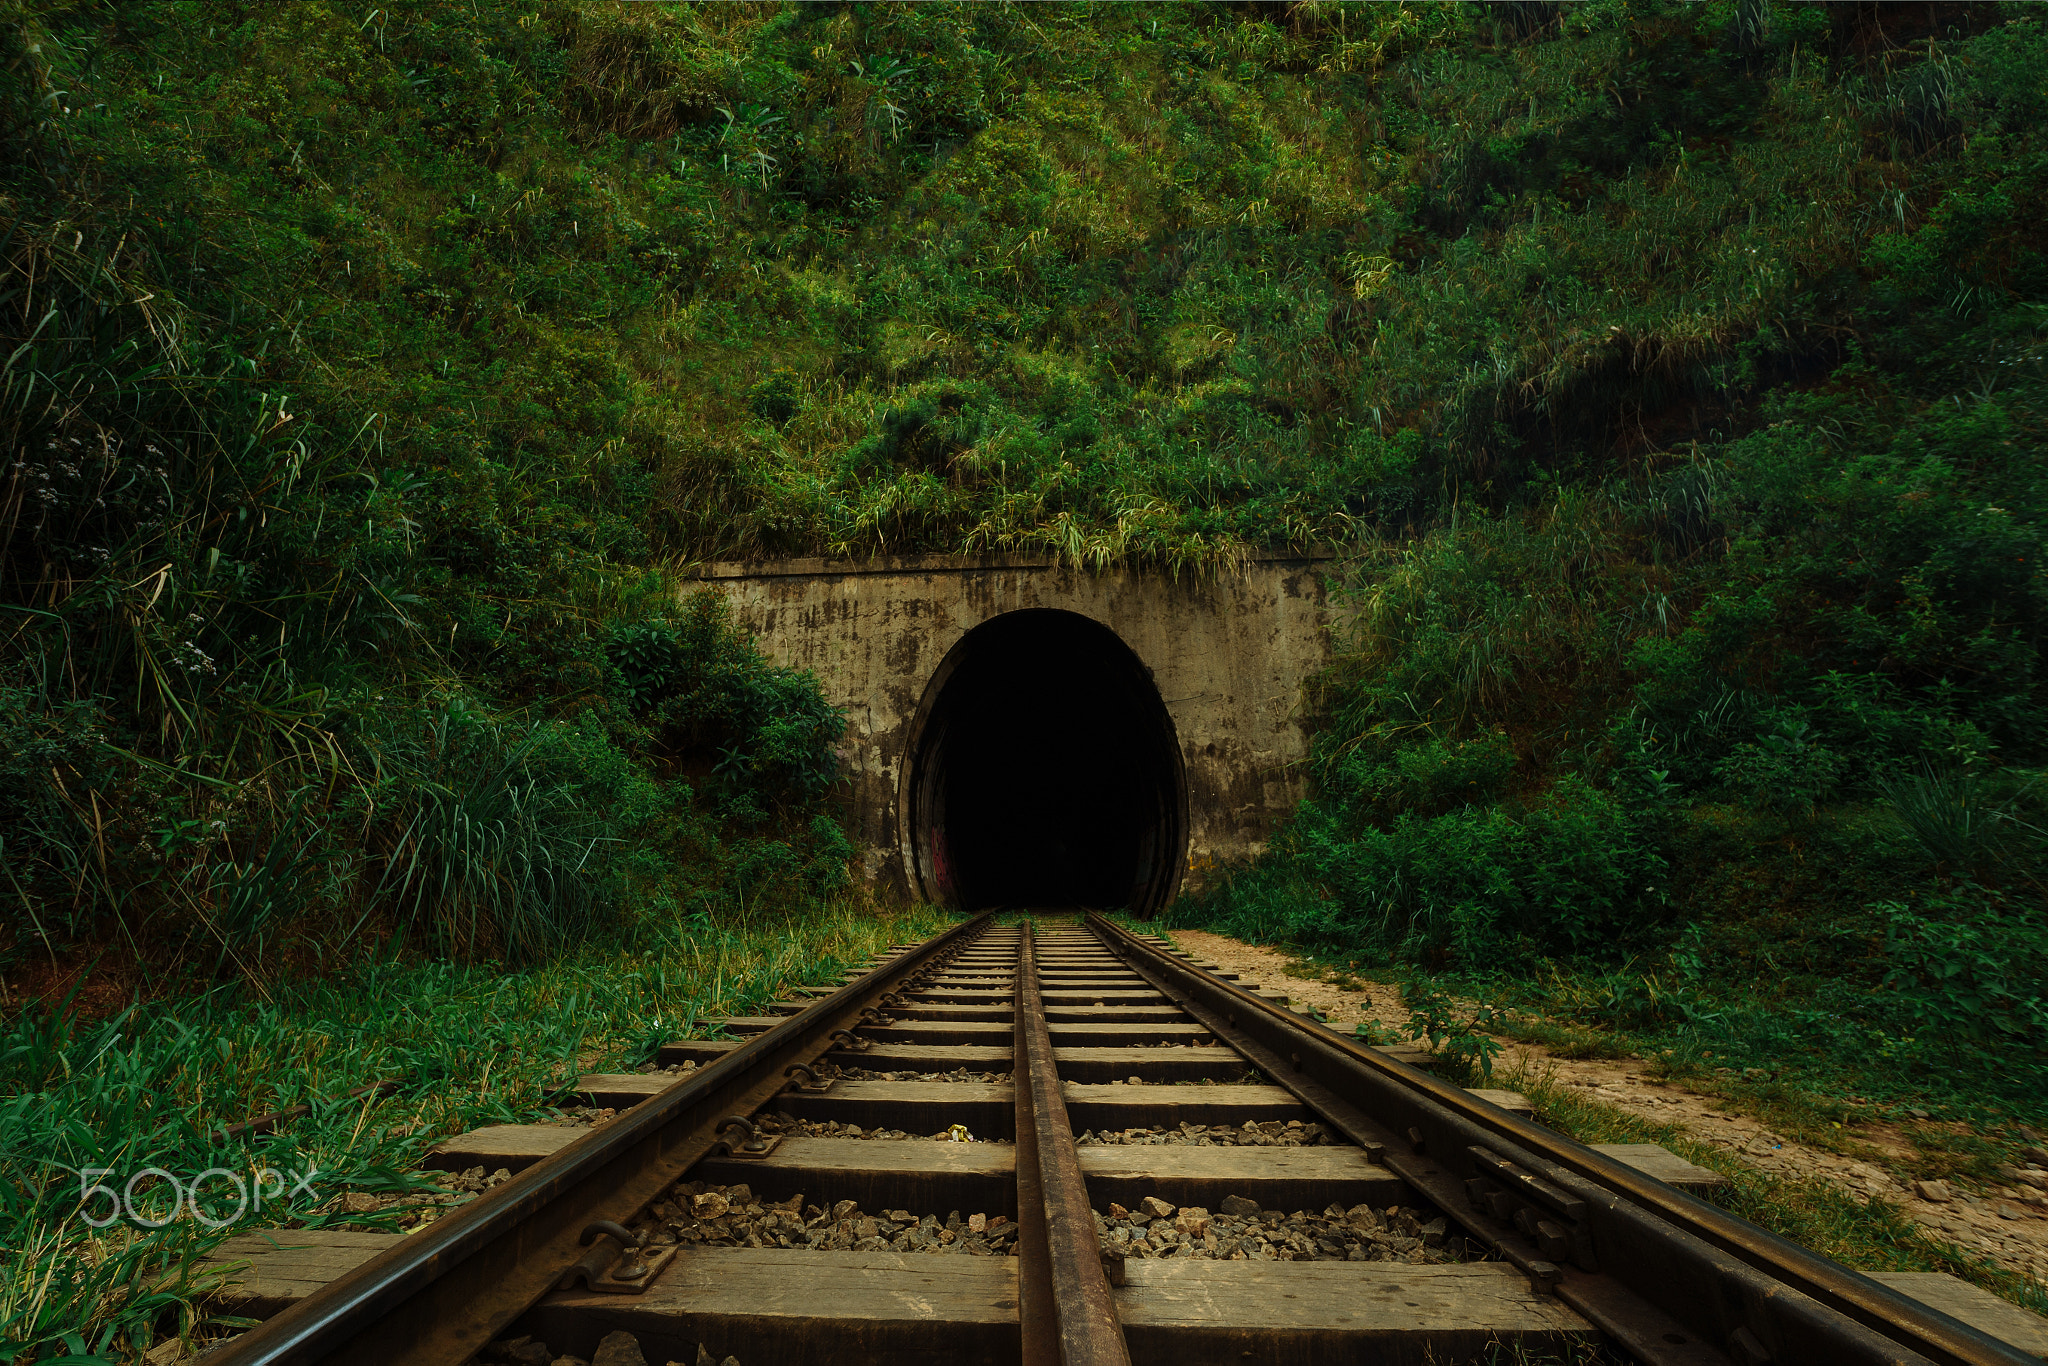 Railway leads into a dark tunnel amid greenery